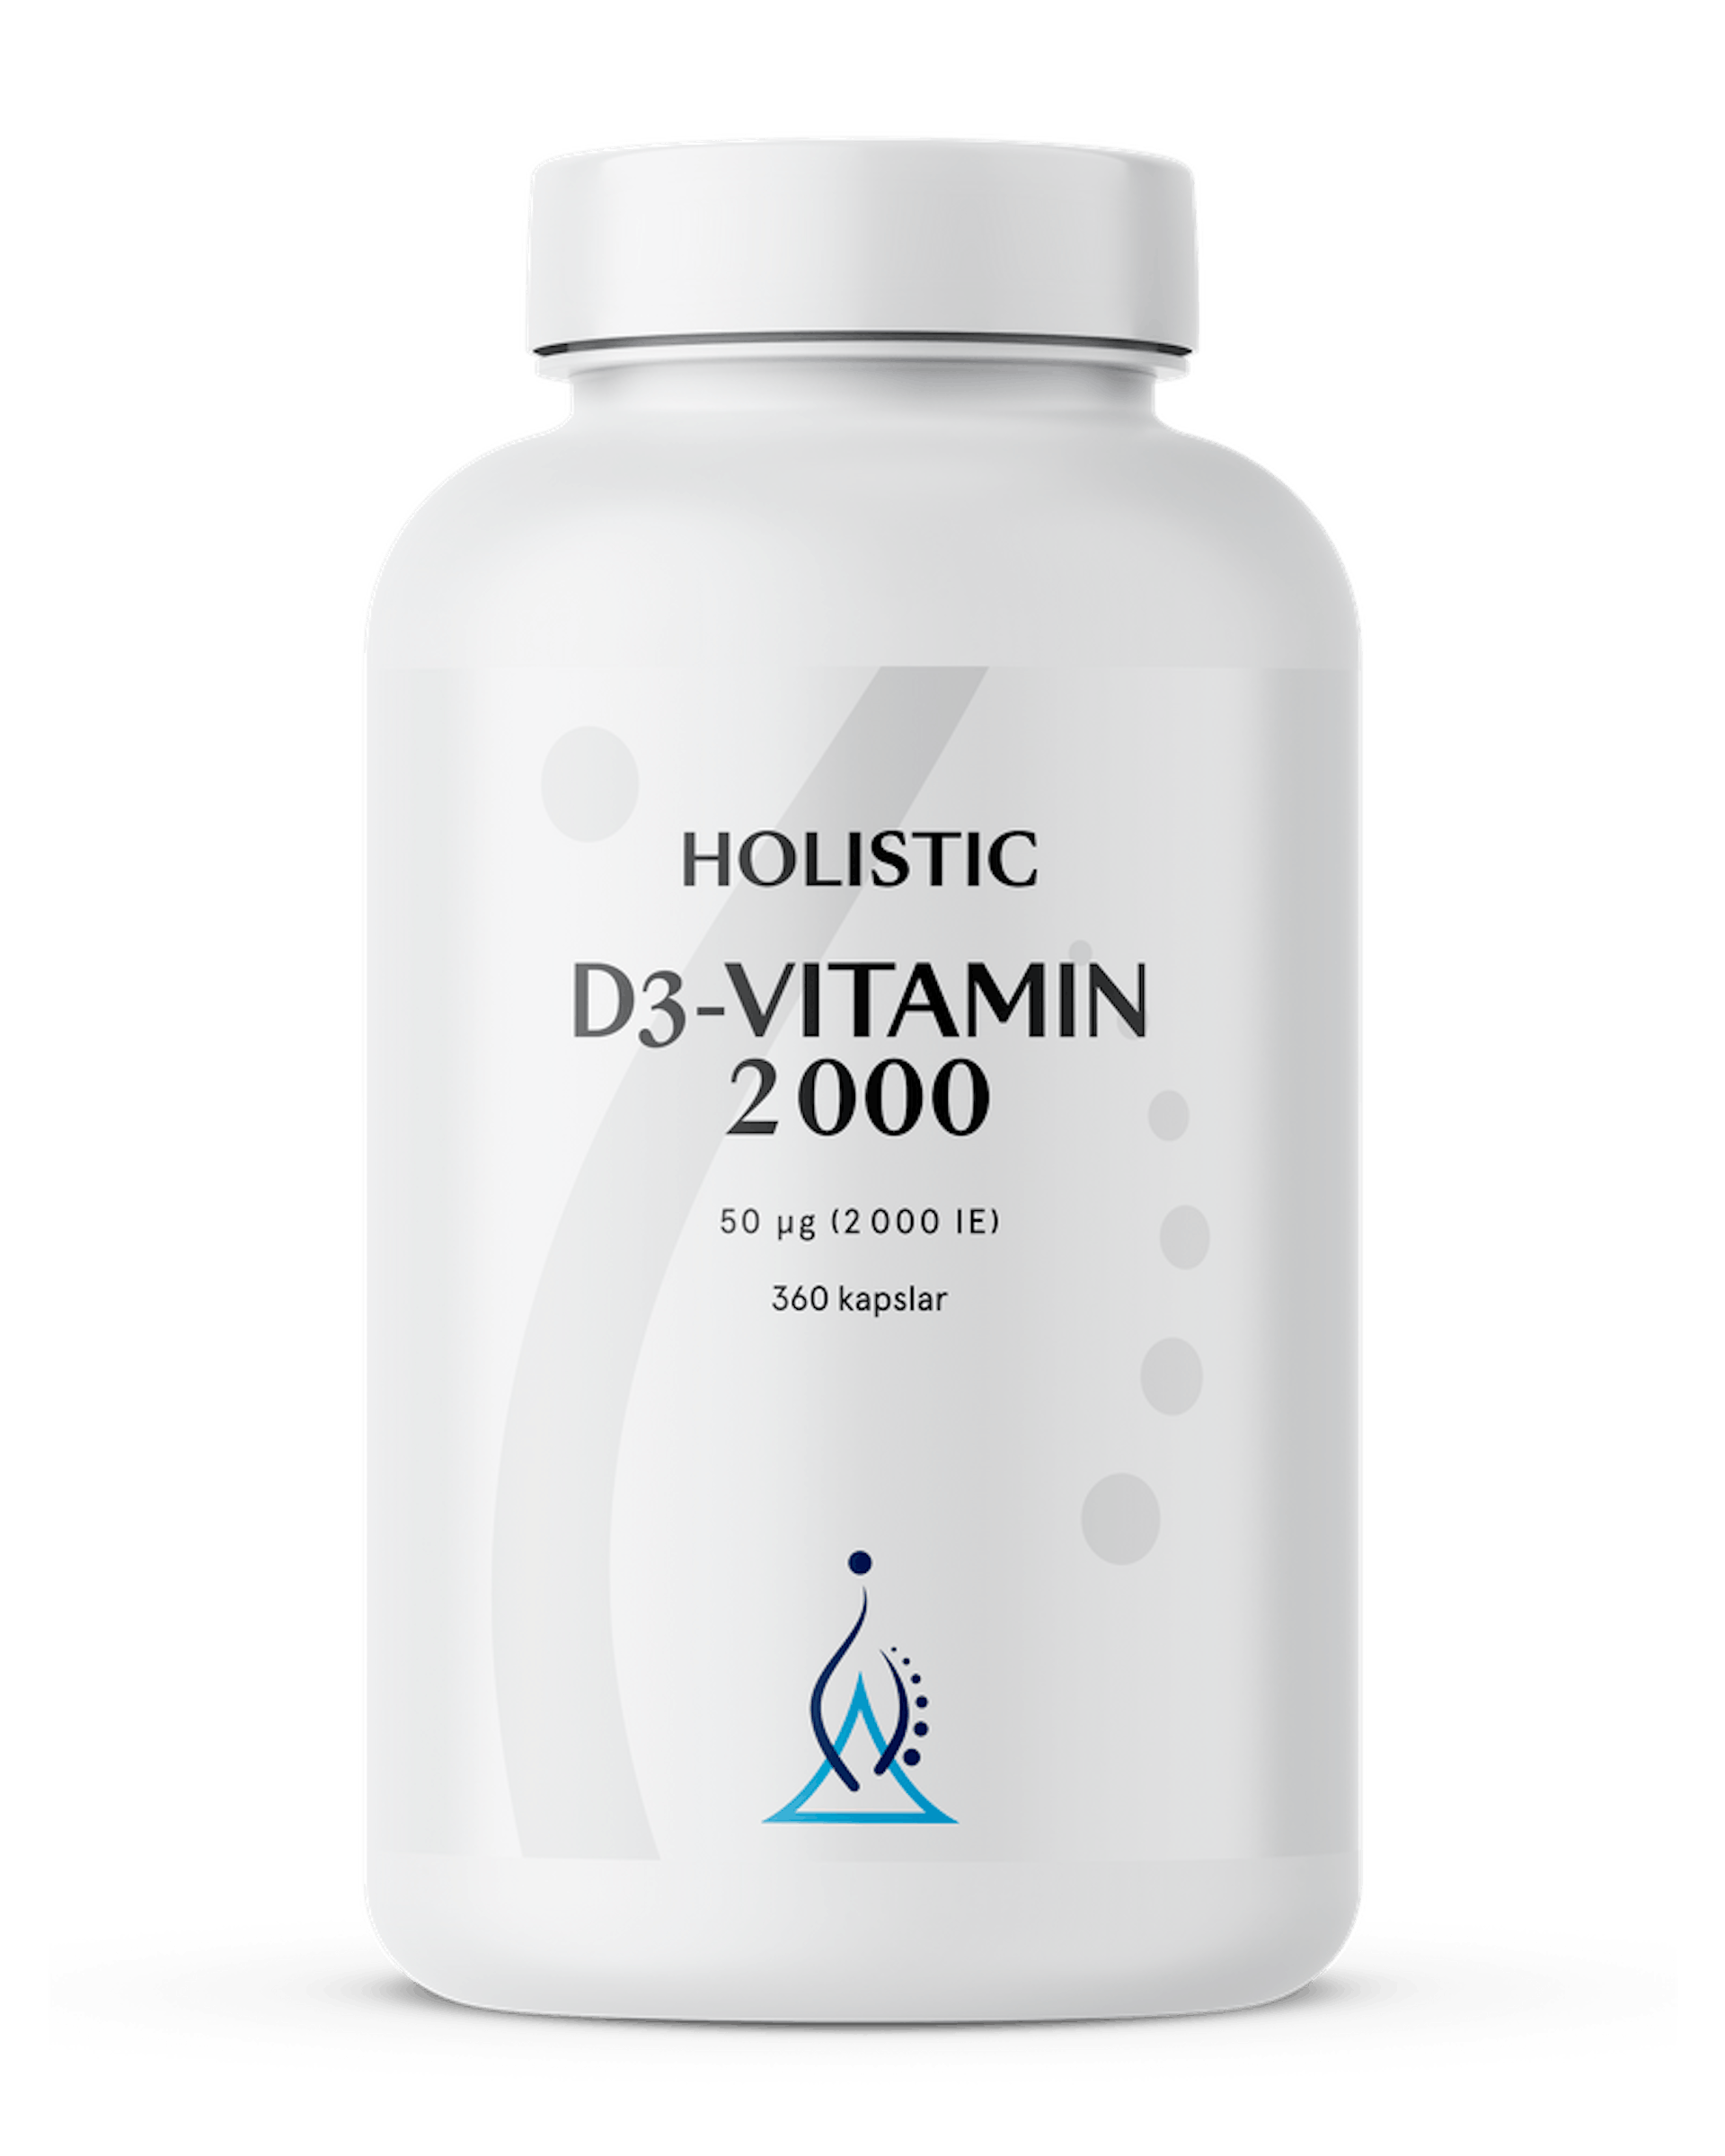 D3-vitamin 2000, 360 kapslar (1 av 1)